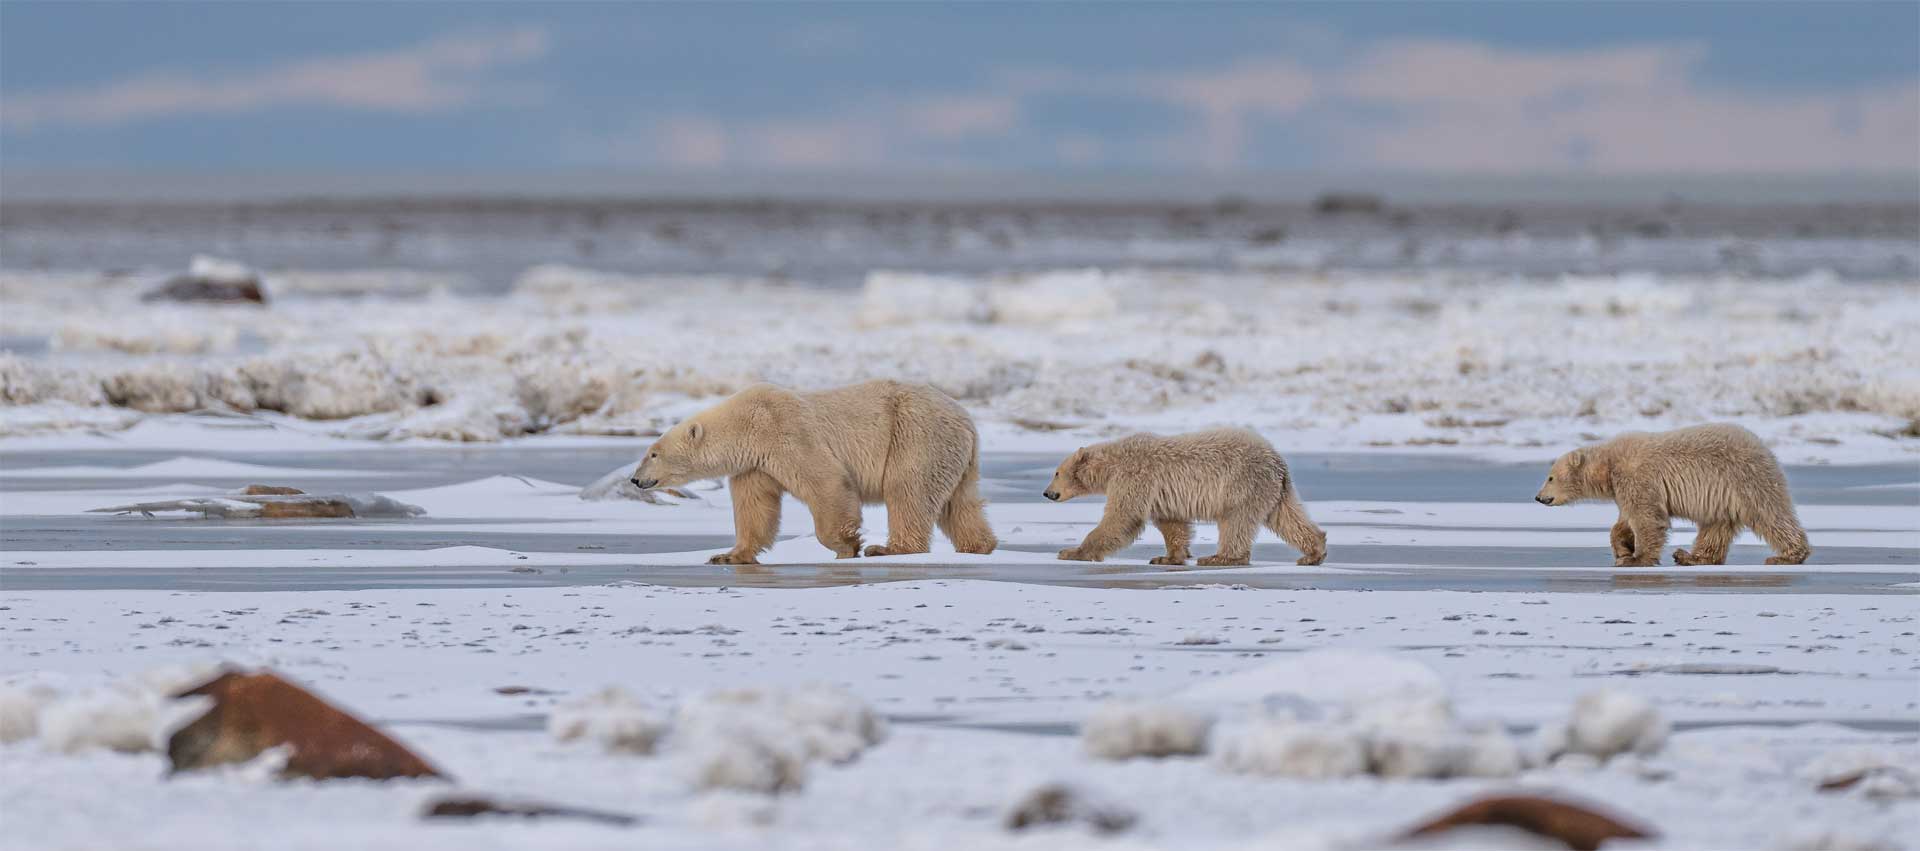 Churchill Polar Bear Season In Full Swing, Fall Walking Tours Begin